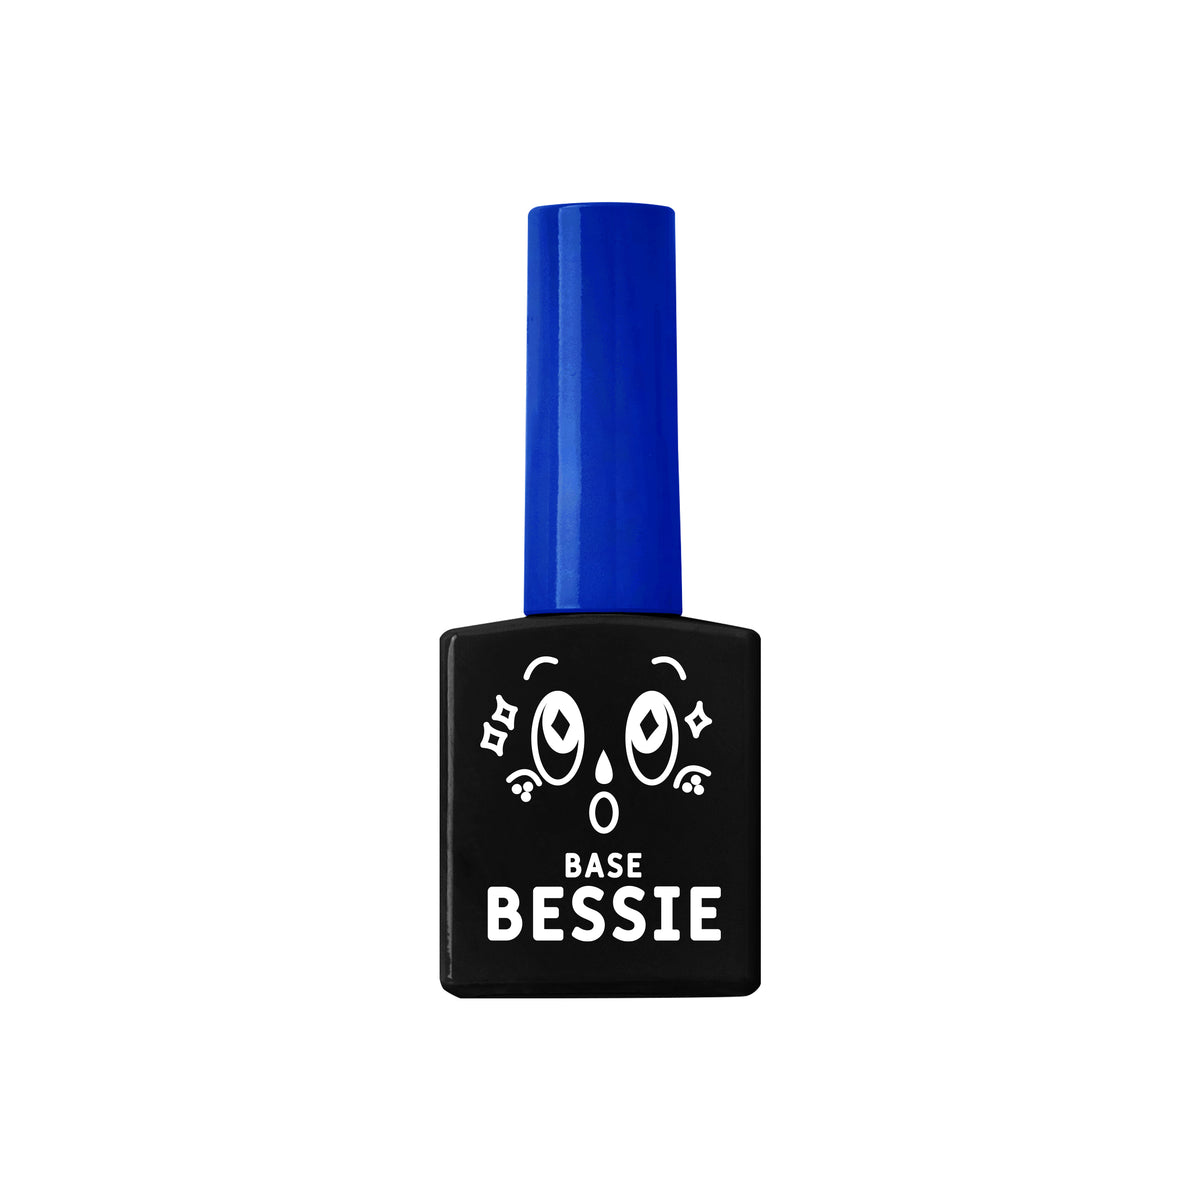 Gels de base Bessie - Top sans essuyage / Top sans essuyage mat / Base / BIAB Clear